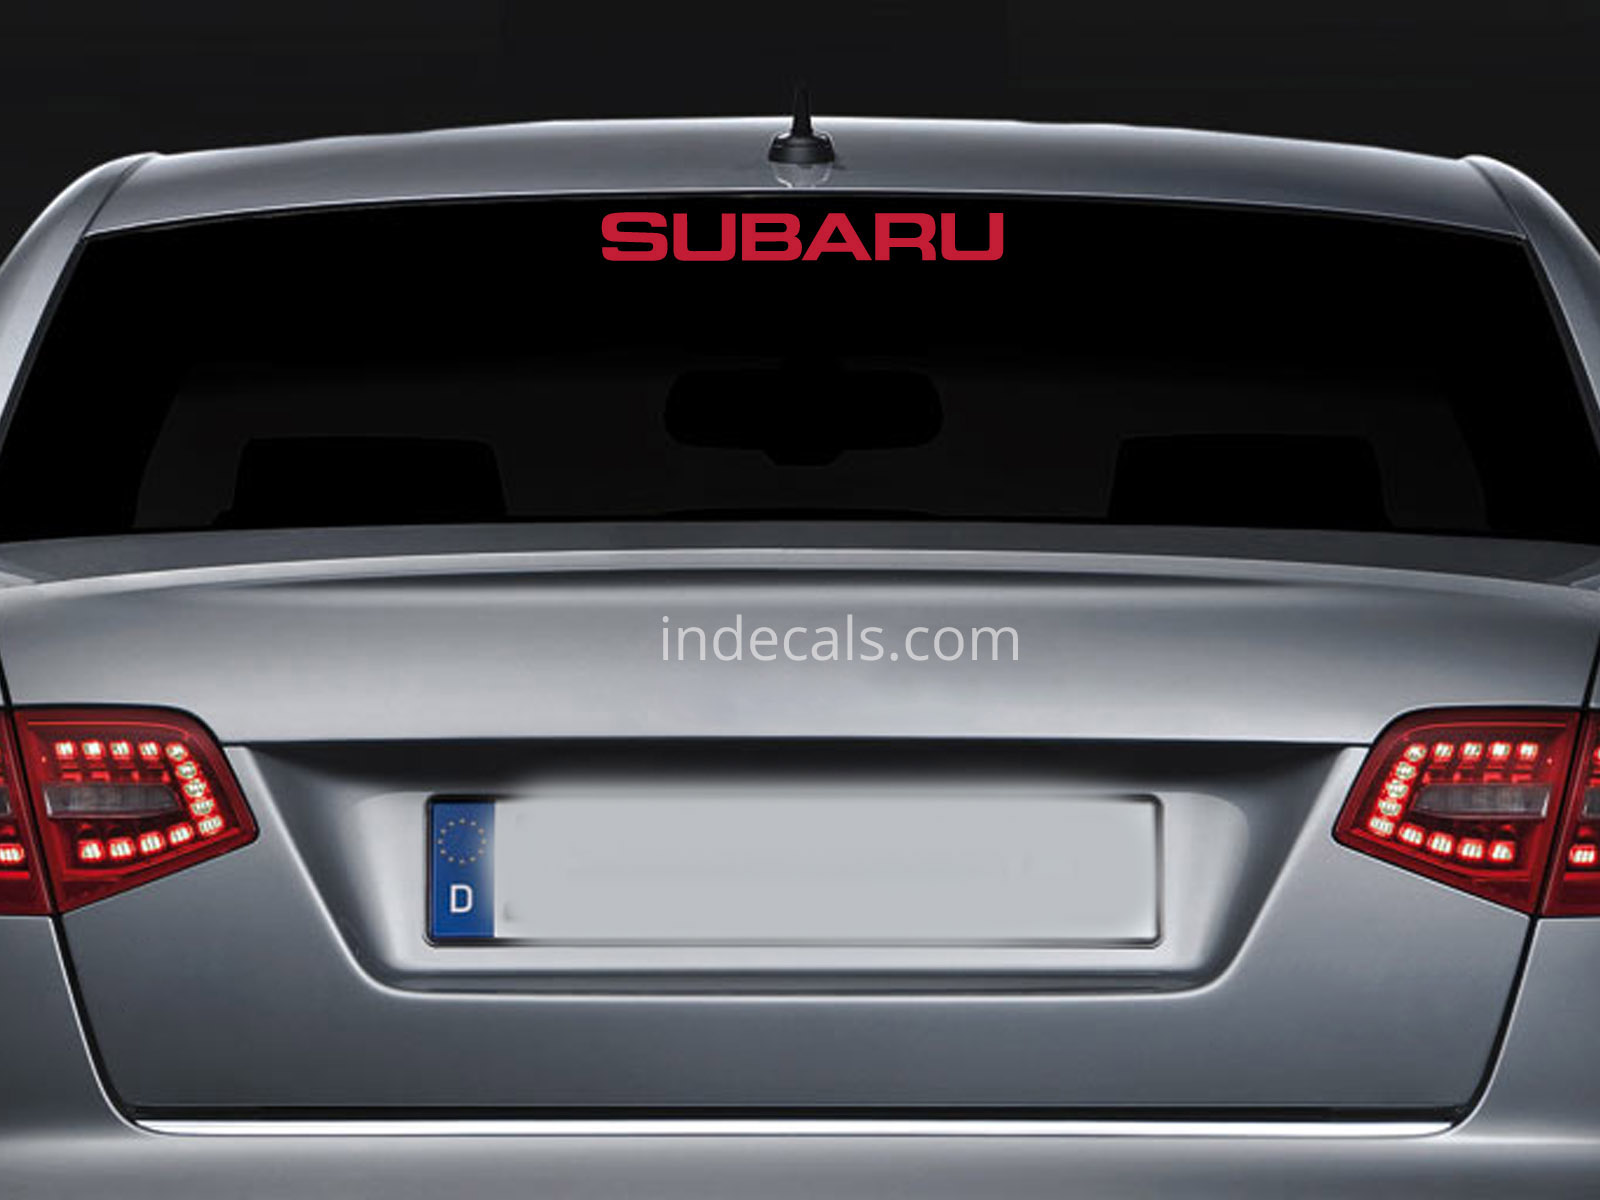 1 x Subaru Sticker for Windshield or Back Window - Red